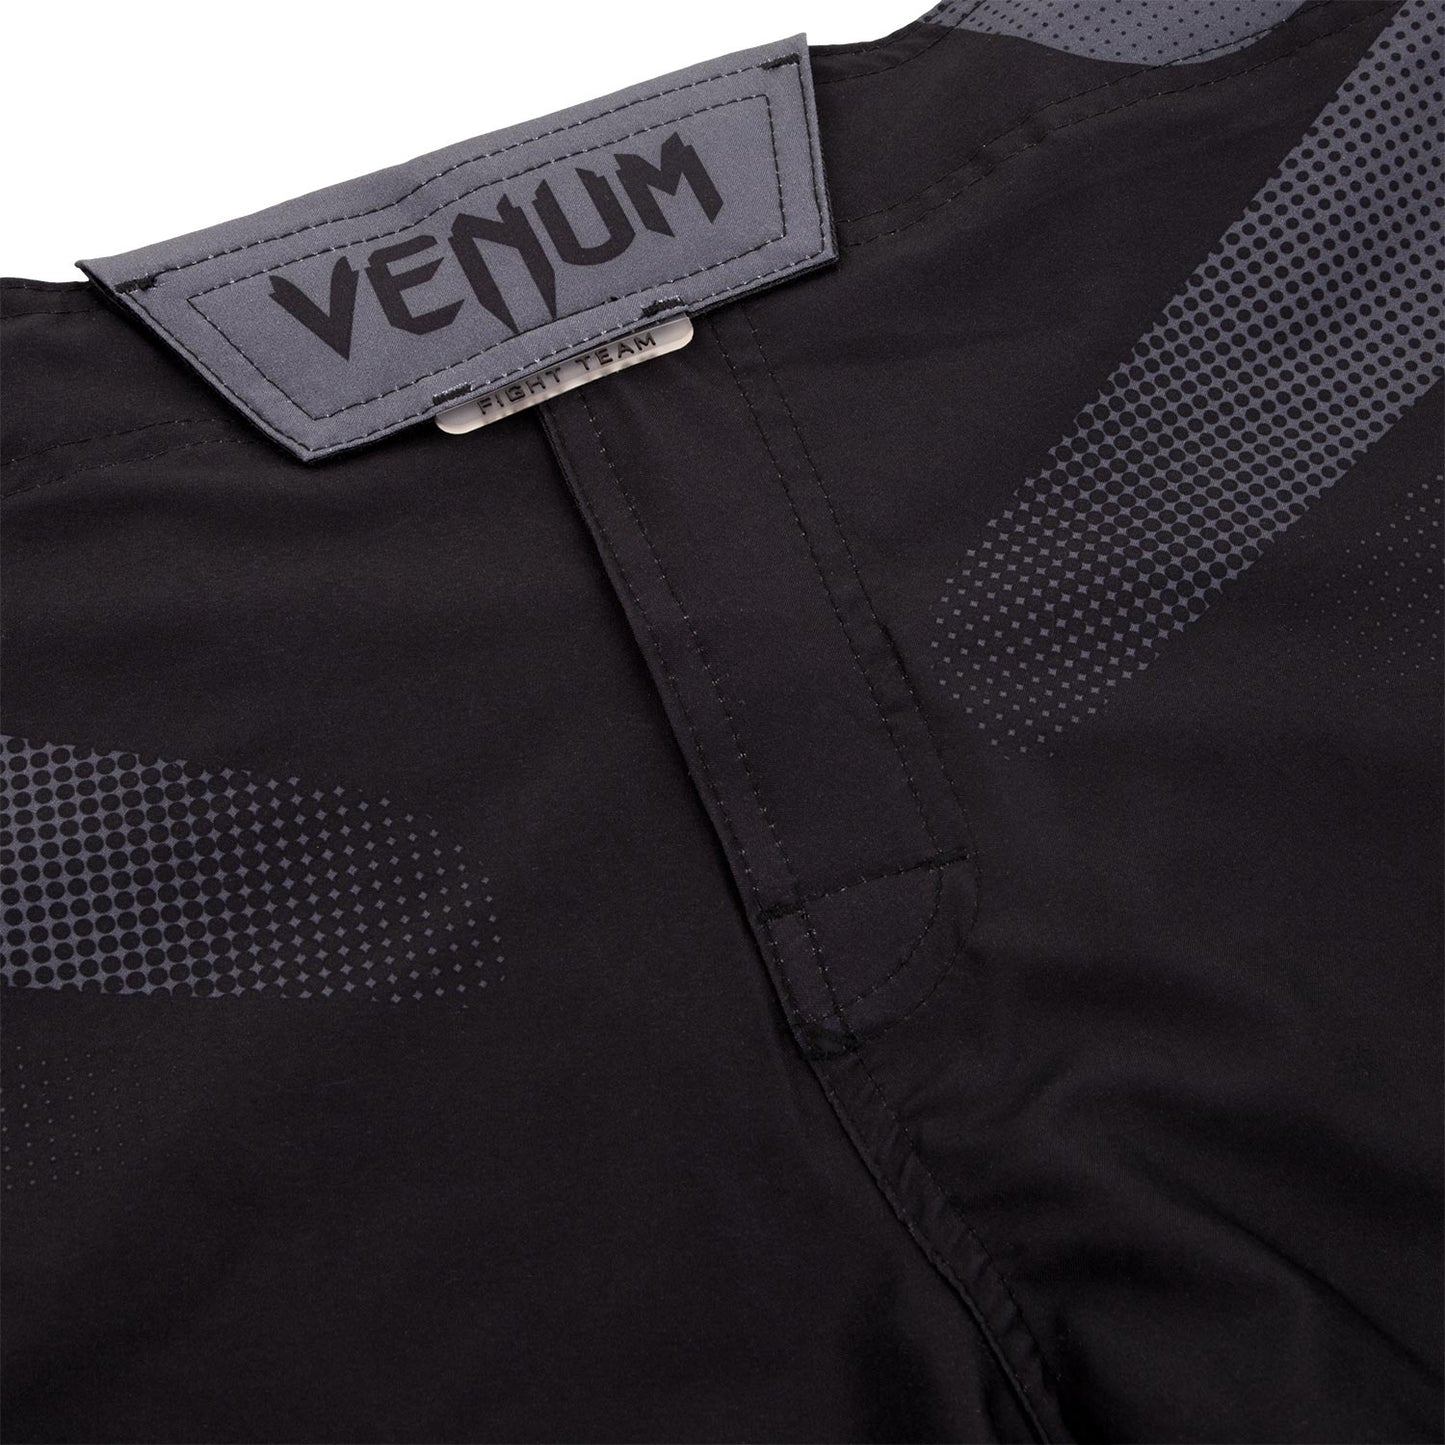 Venum Tempest 2.0 Fightshorts - Black/Grey